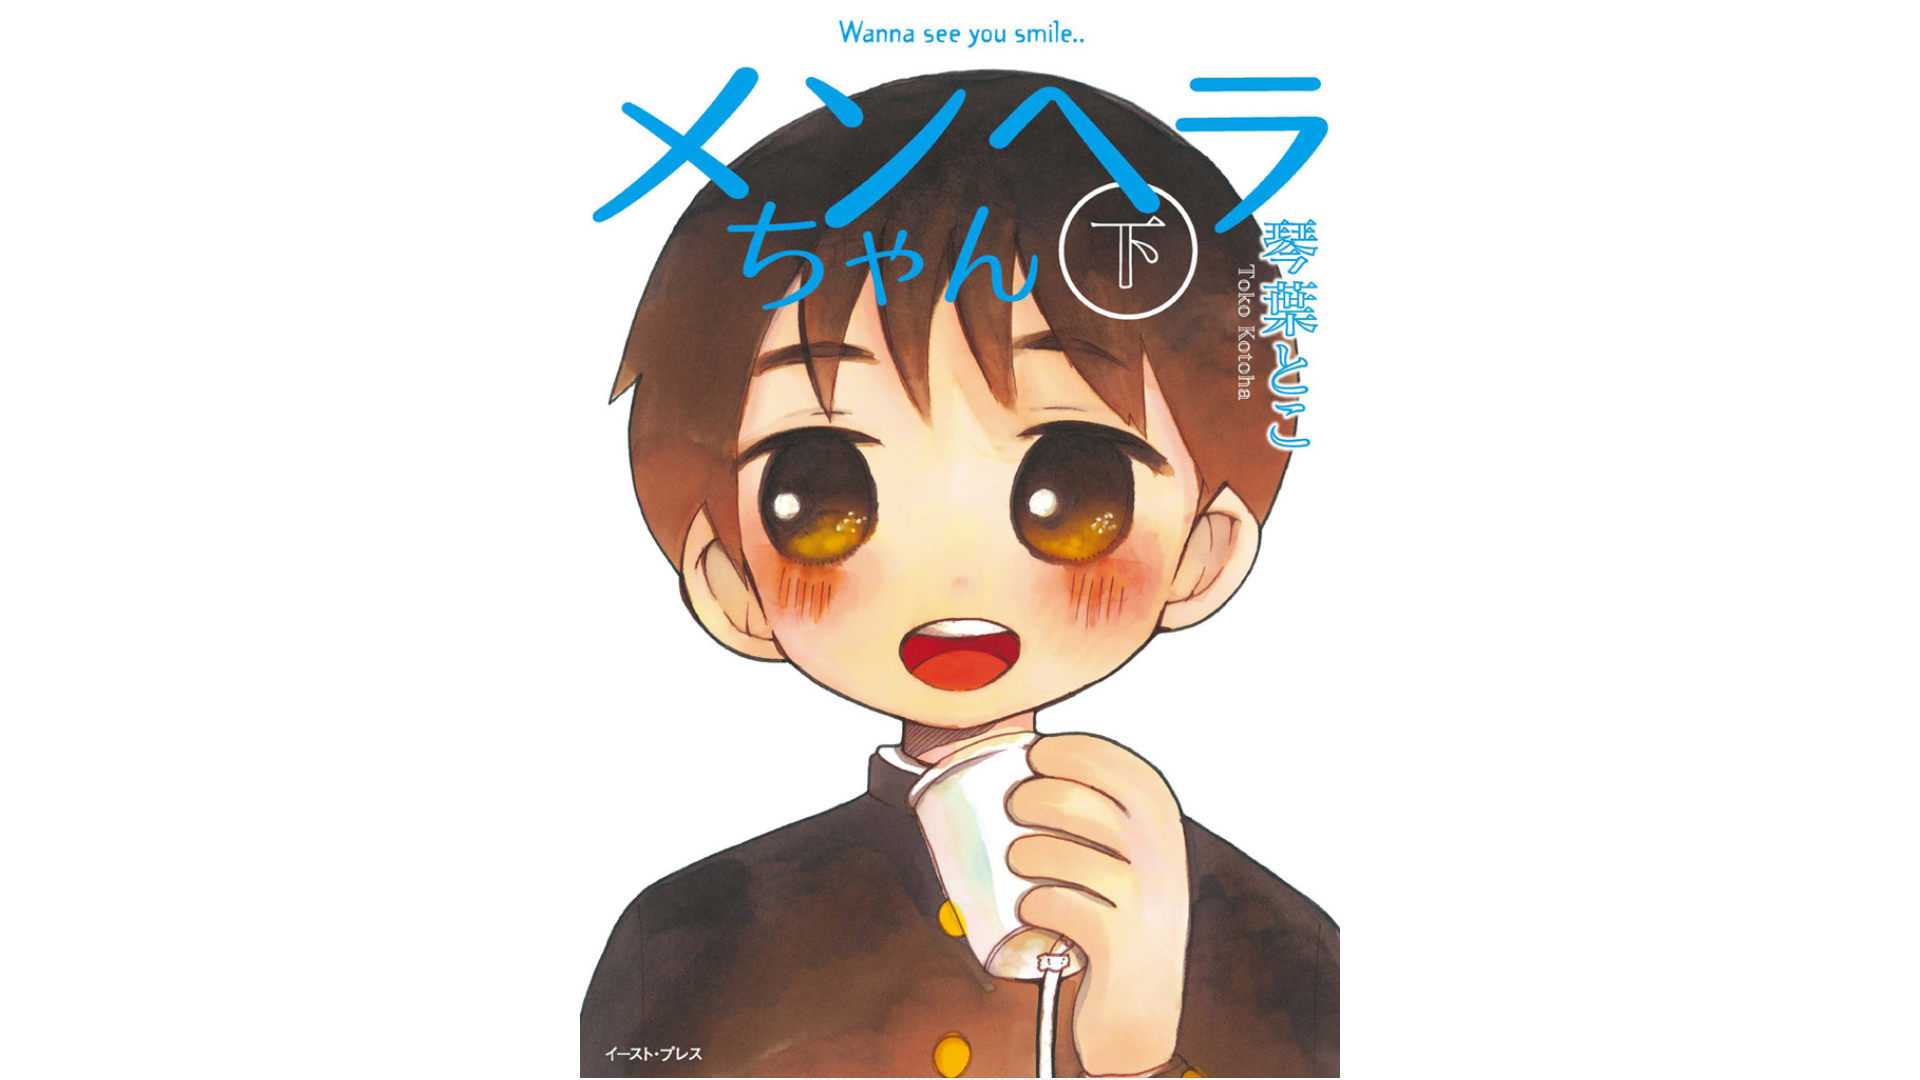 ✡️ Menhera メンヘラ facts (Manga) ✡️